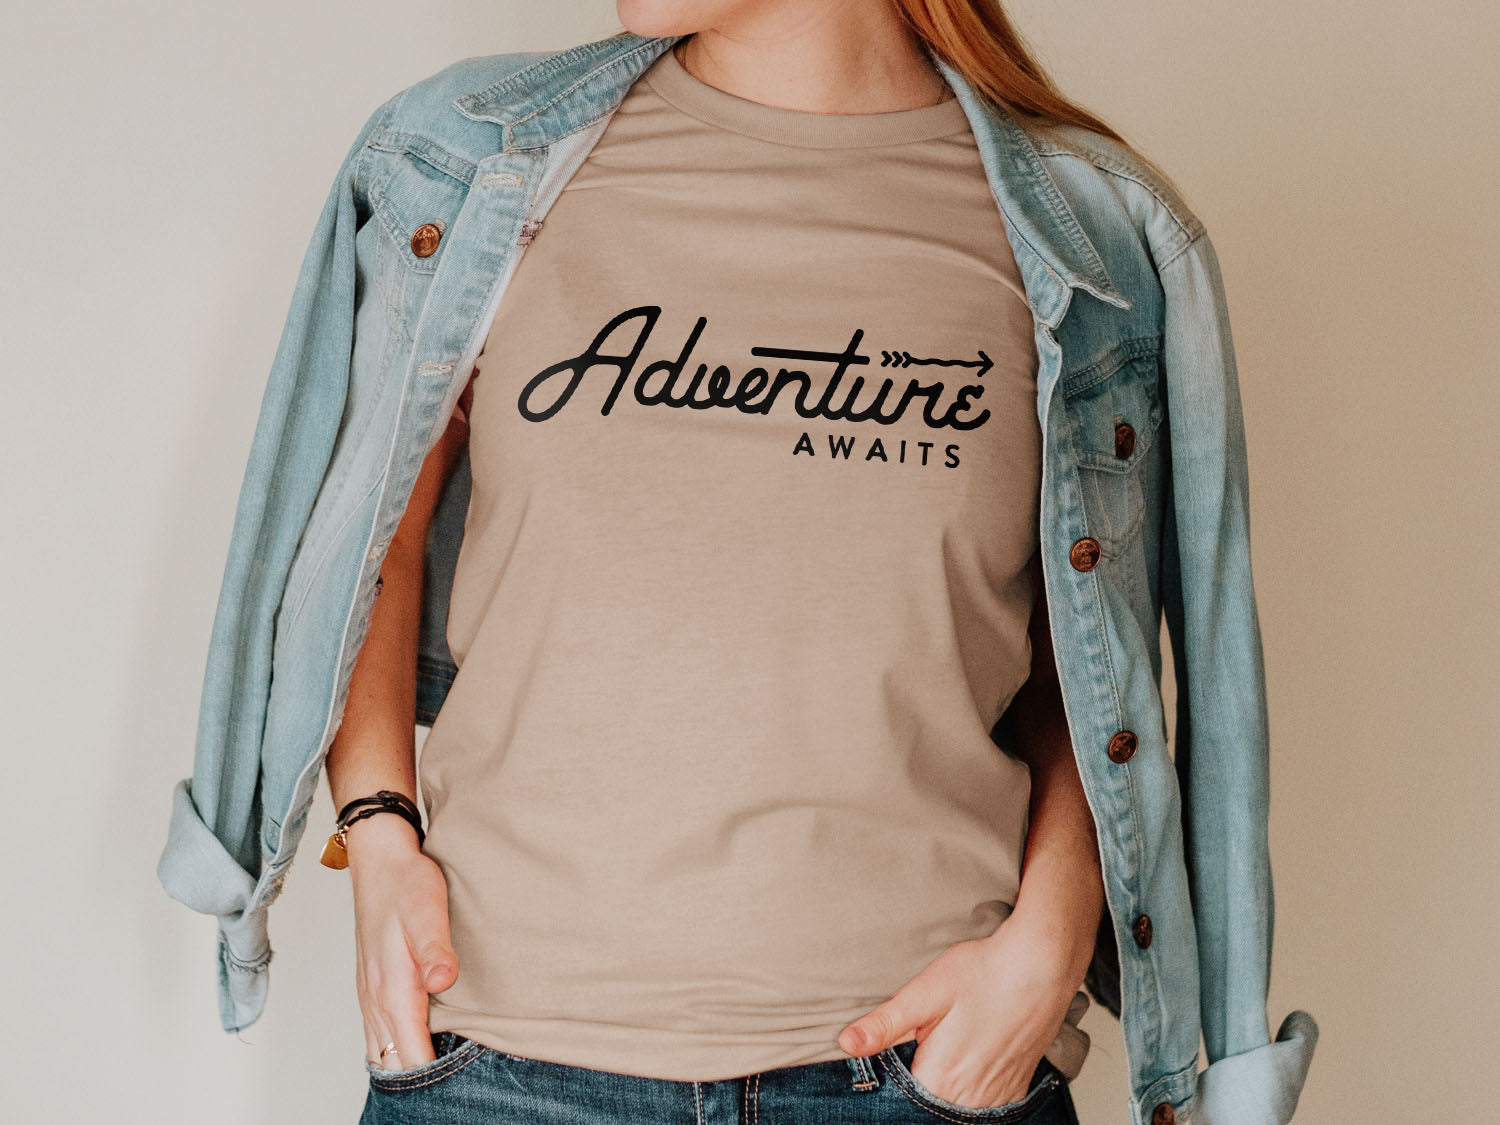 Adventure Awaits T-shirt - Outdoor Nature Camping Retro Minimal Design Printed Tee Shirt